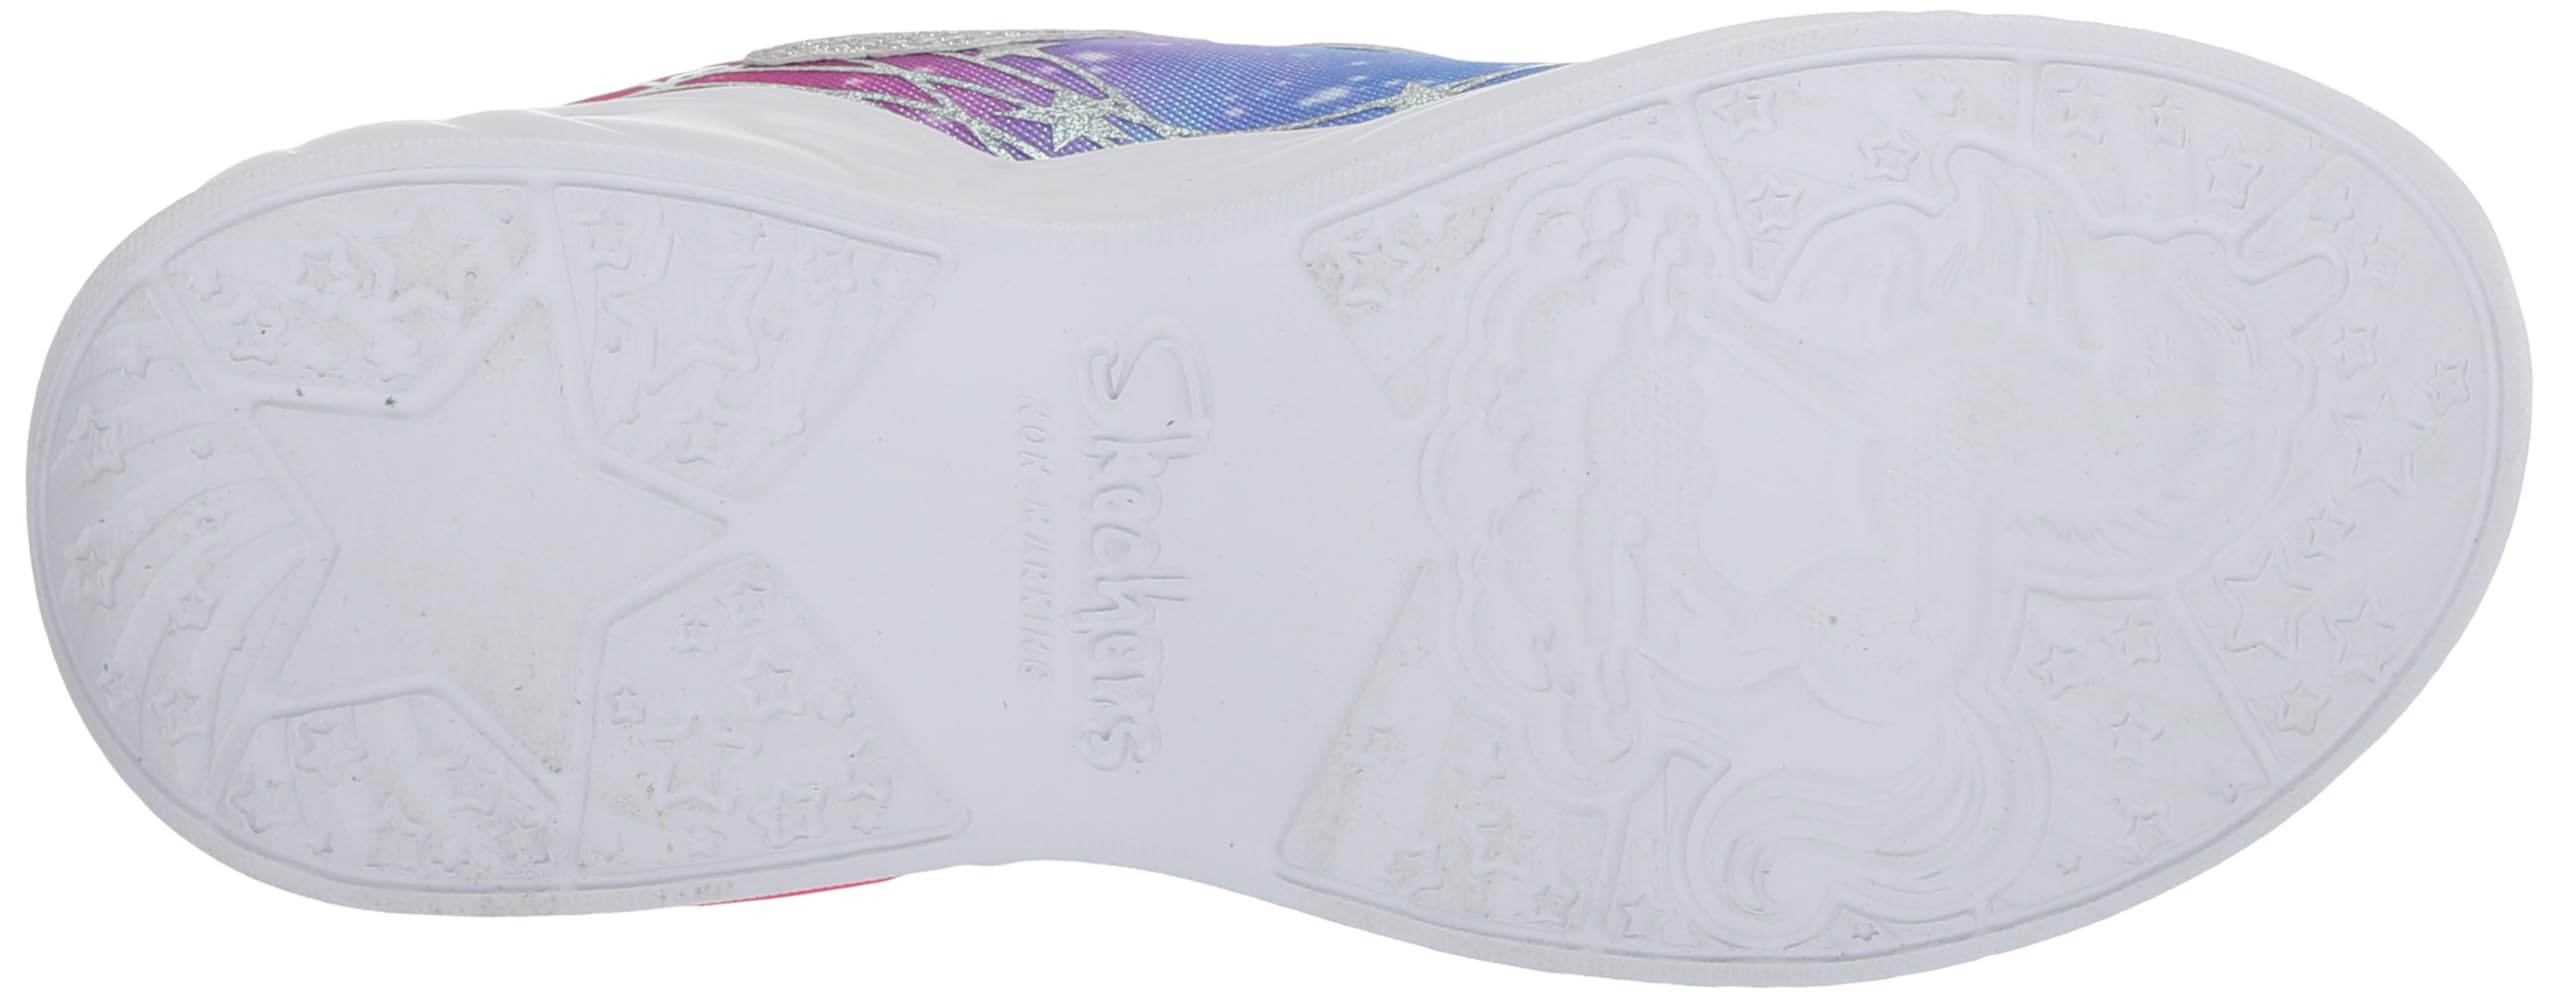 Skechers Unisex-Child Unicorn Dreams-Wishful Magic Sneaker